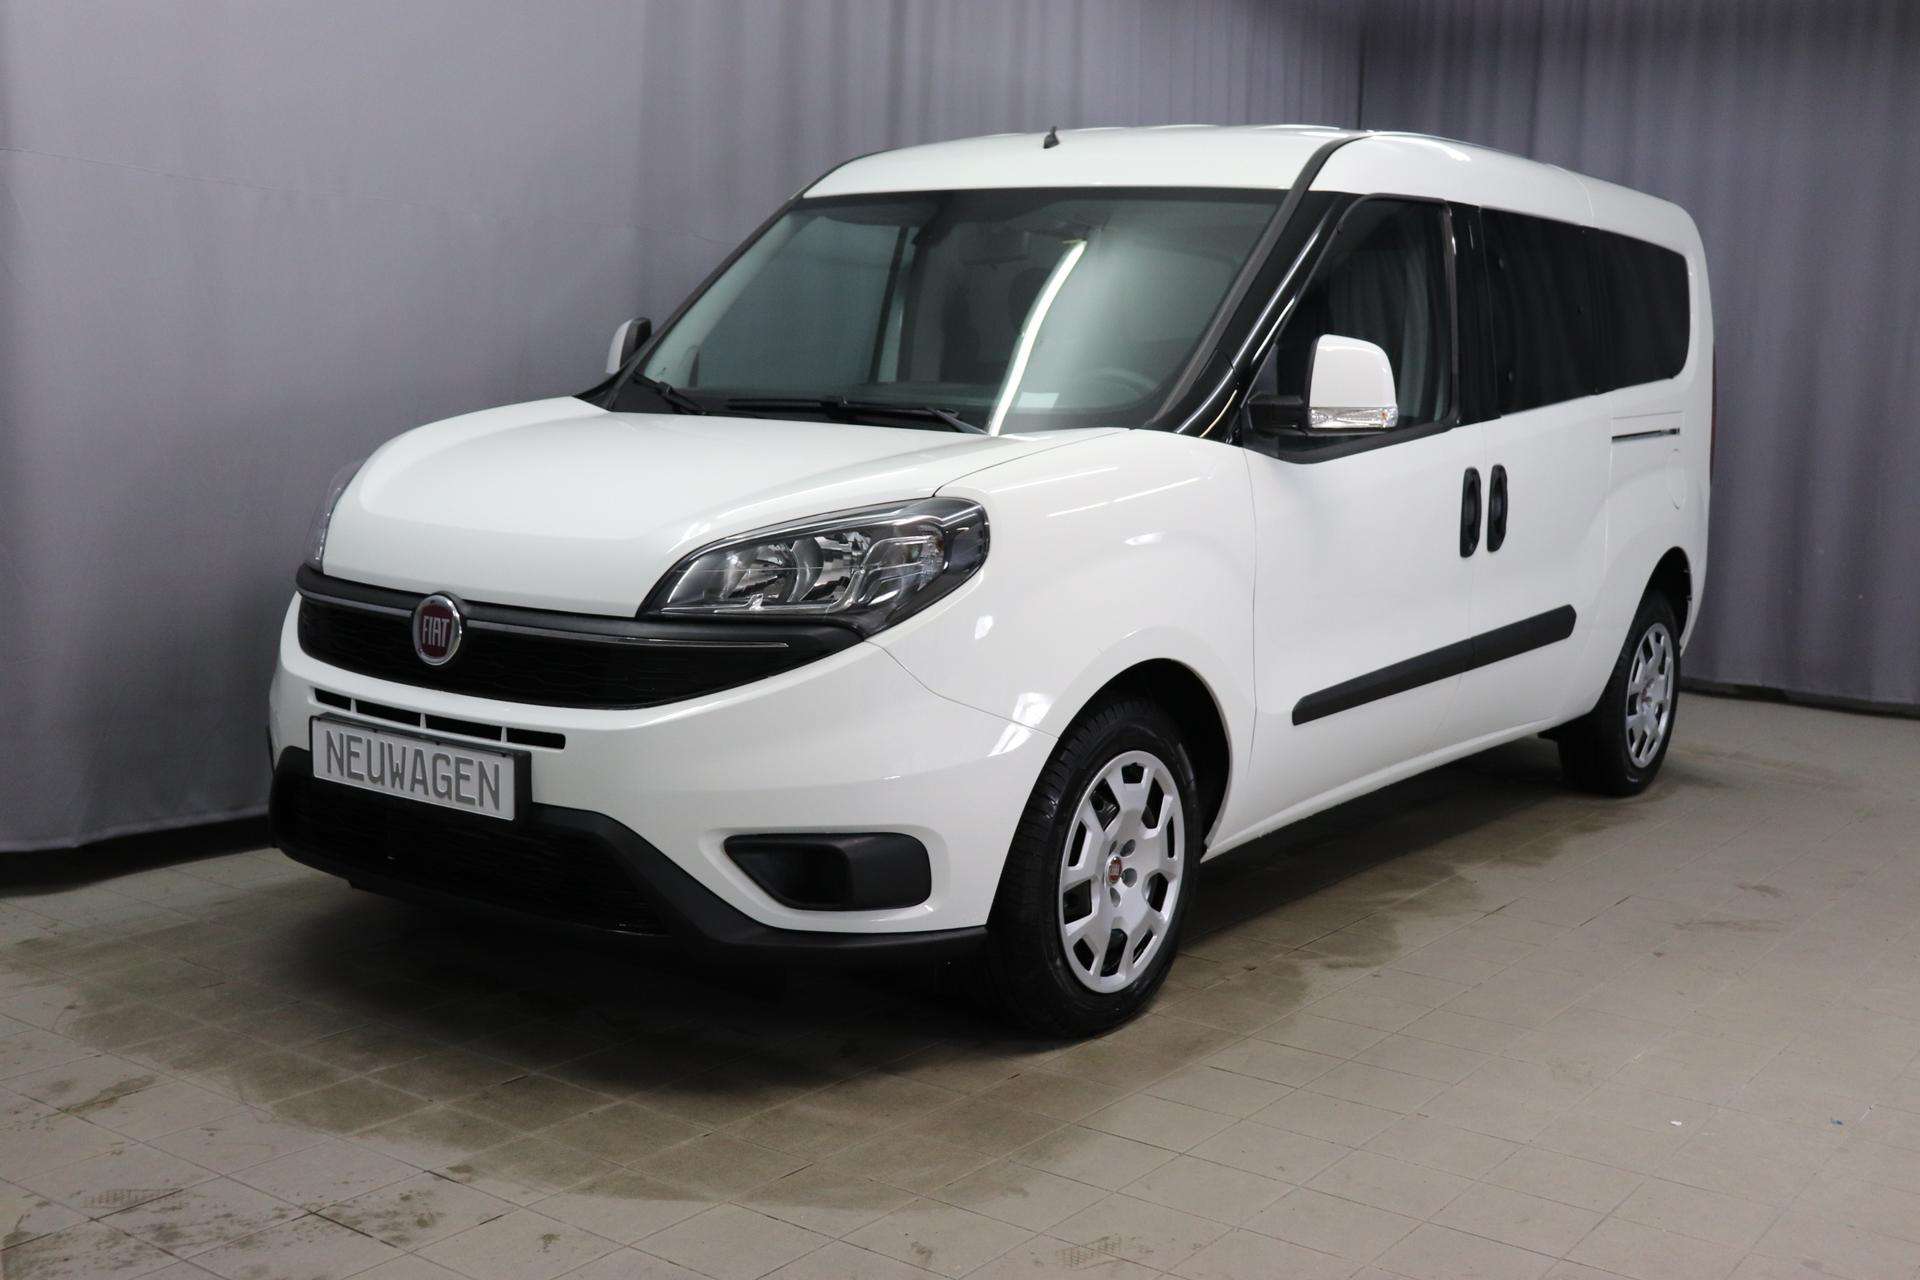 Fiat Doblo Van in White new in Osnabrück for € 25,480.-